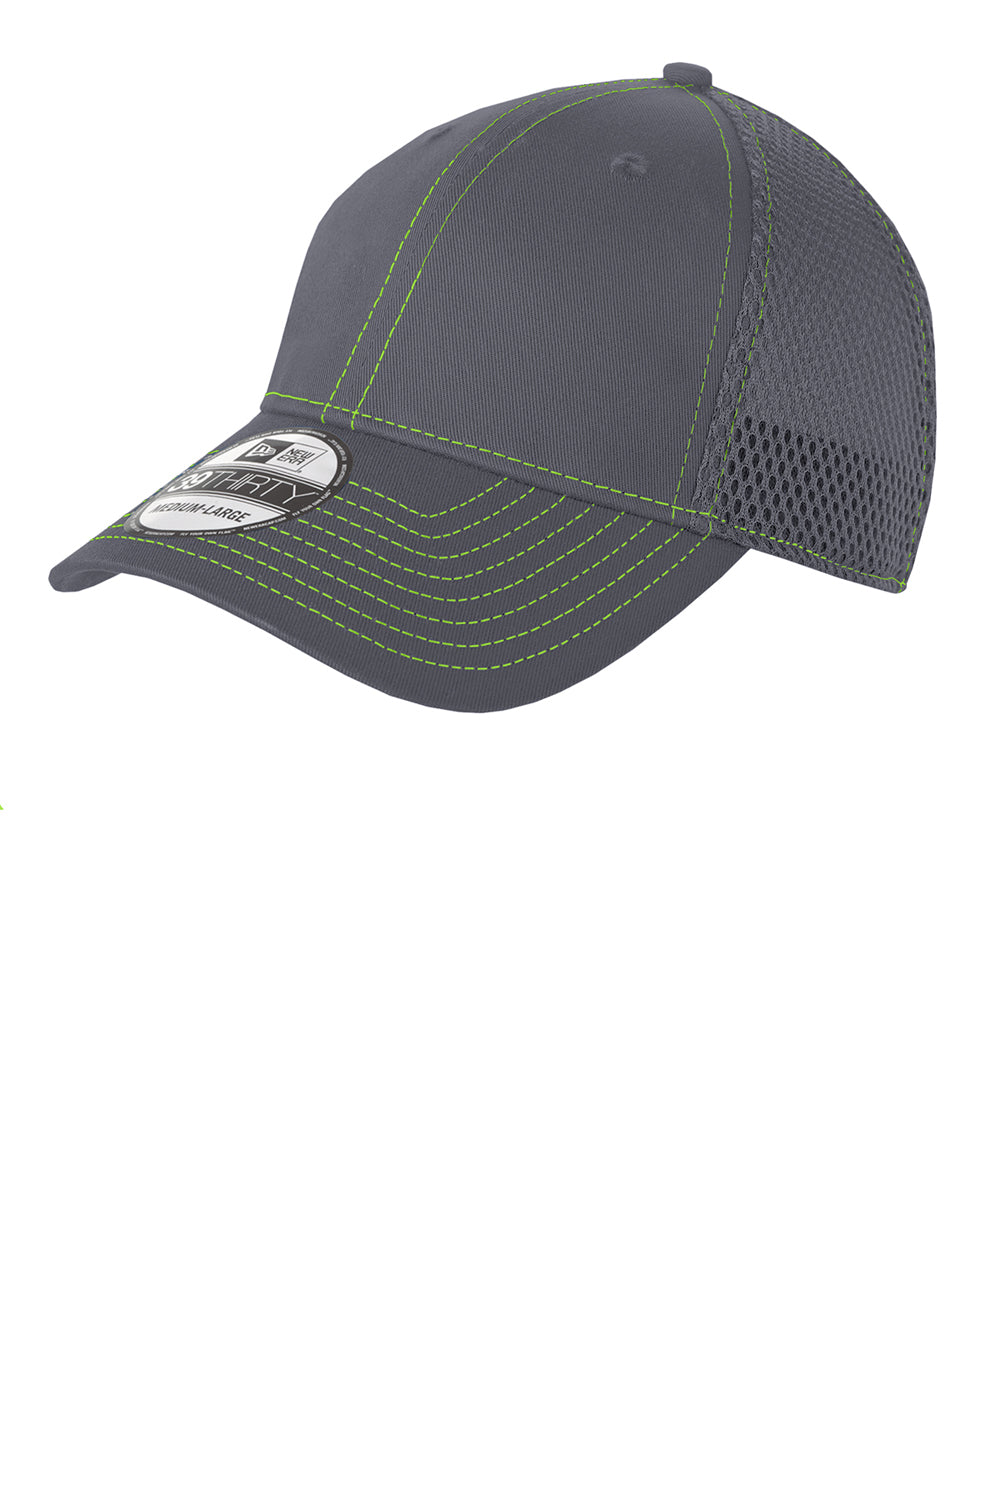 New Era NE1120 Mens Stretch Fit Hat Graphite Grey/Cyber Green Front